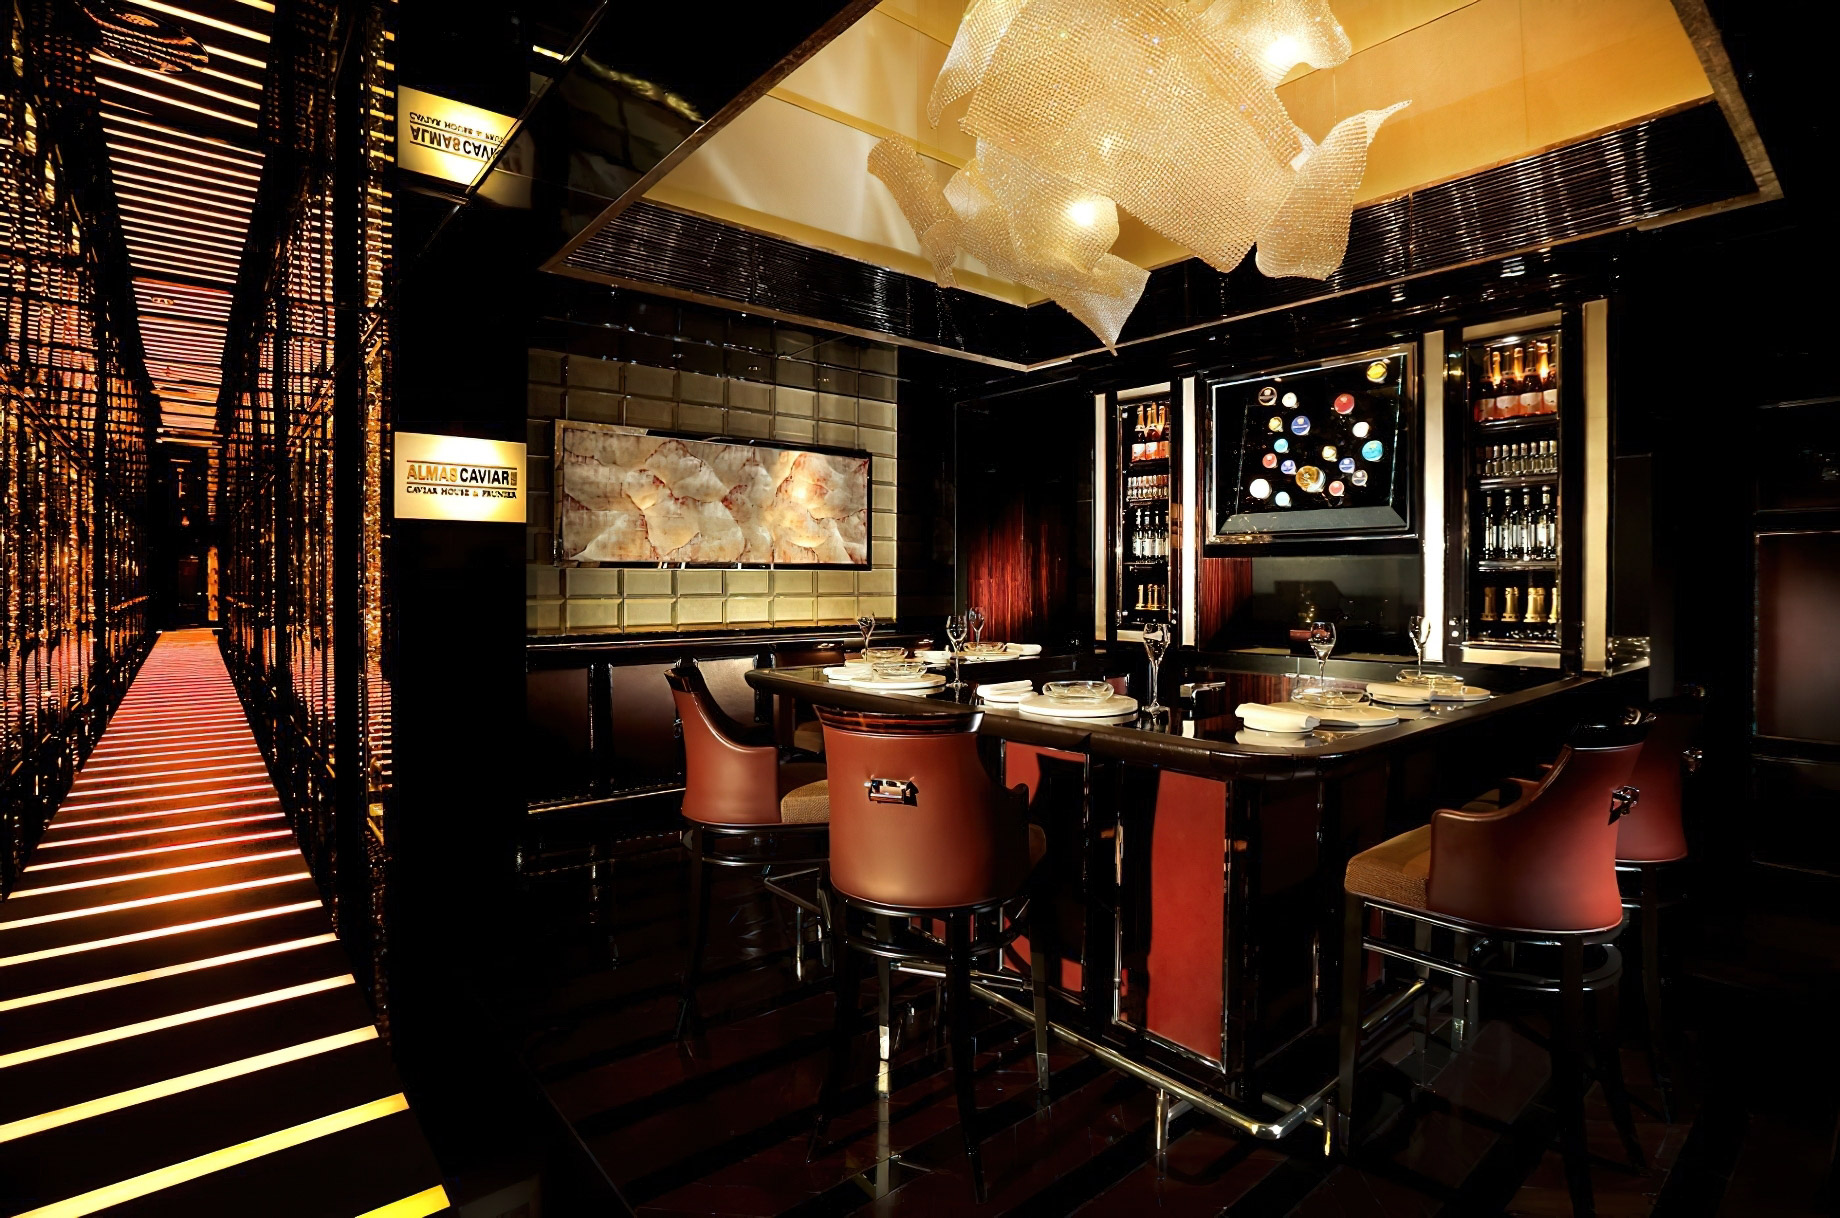 The Ritz-Carlton, Hong Kong Hotel – West Kowloon, Hong Kong – Almas Caviar Bar